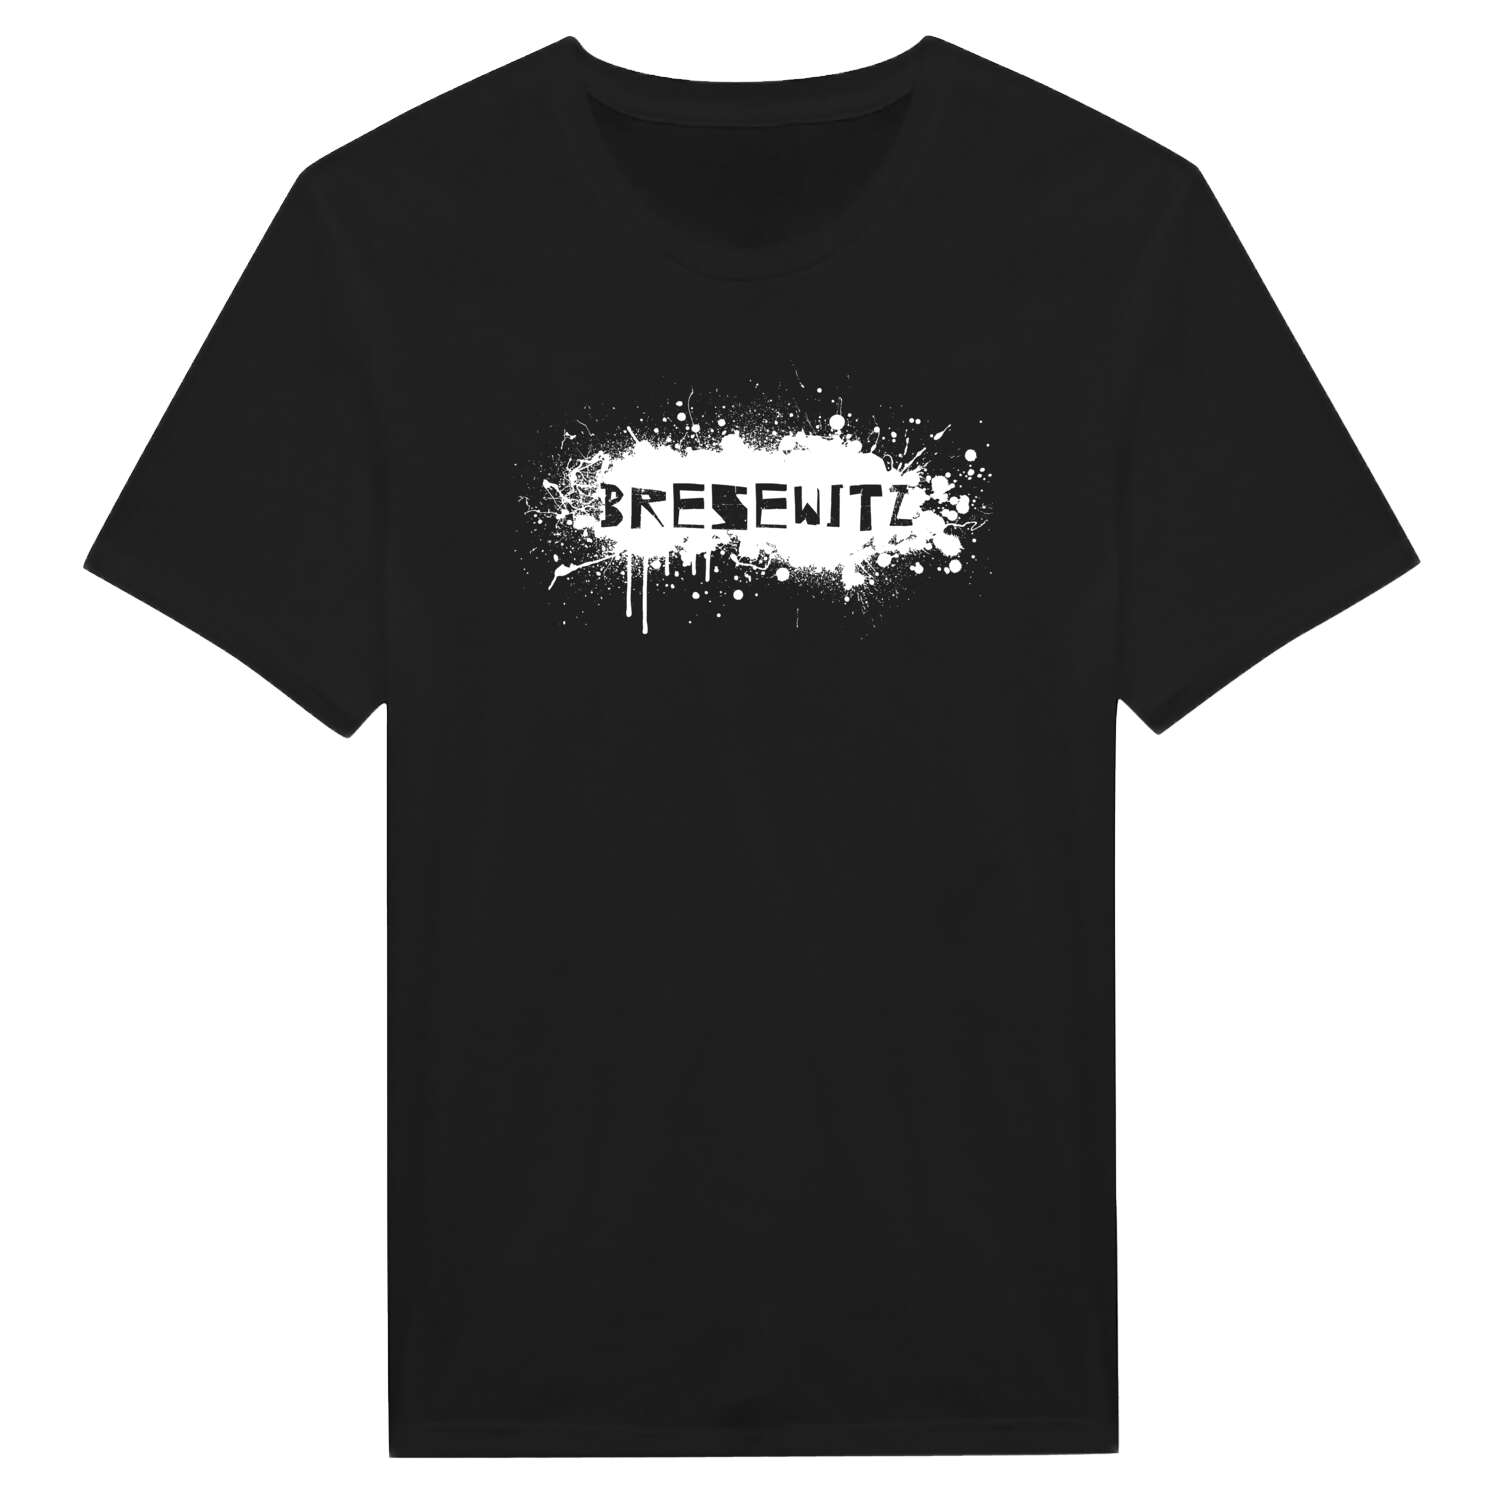 Bresewitz T-Shirt »Paint Splash Punk«